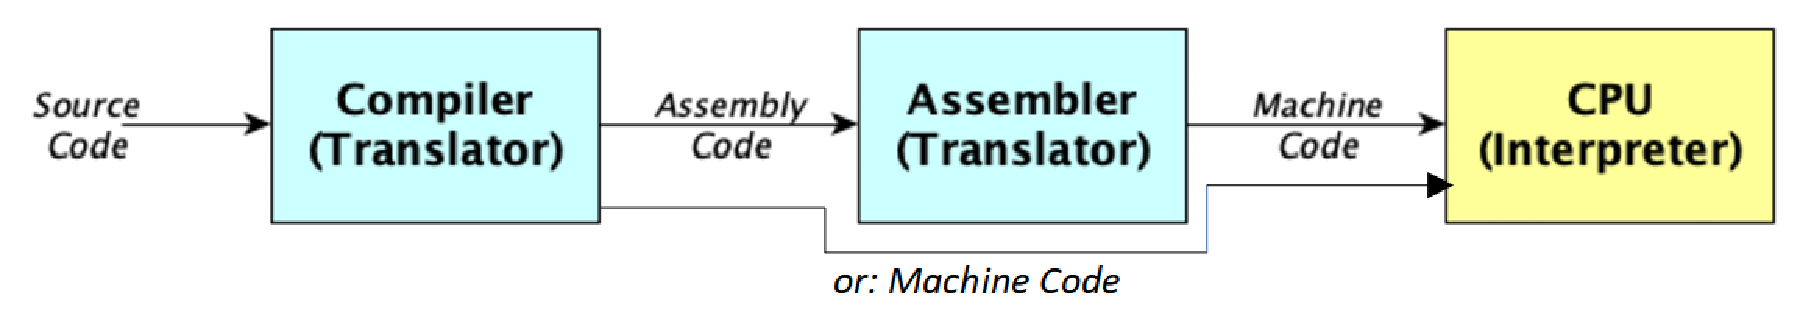 Compiler terminology